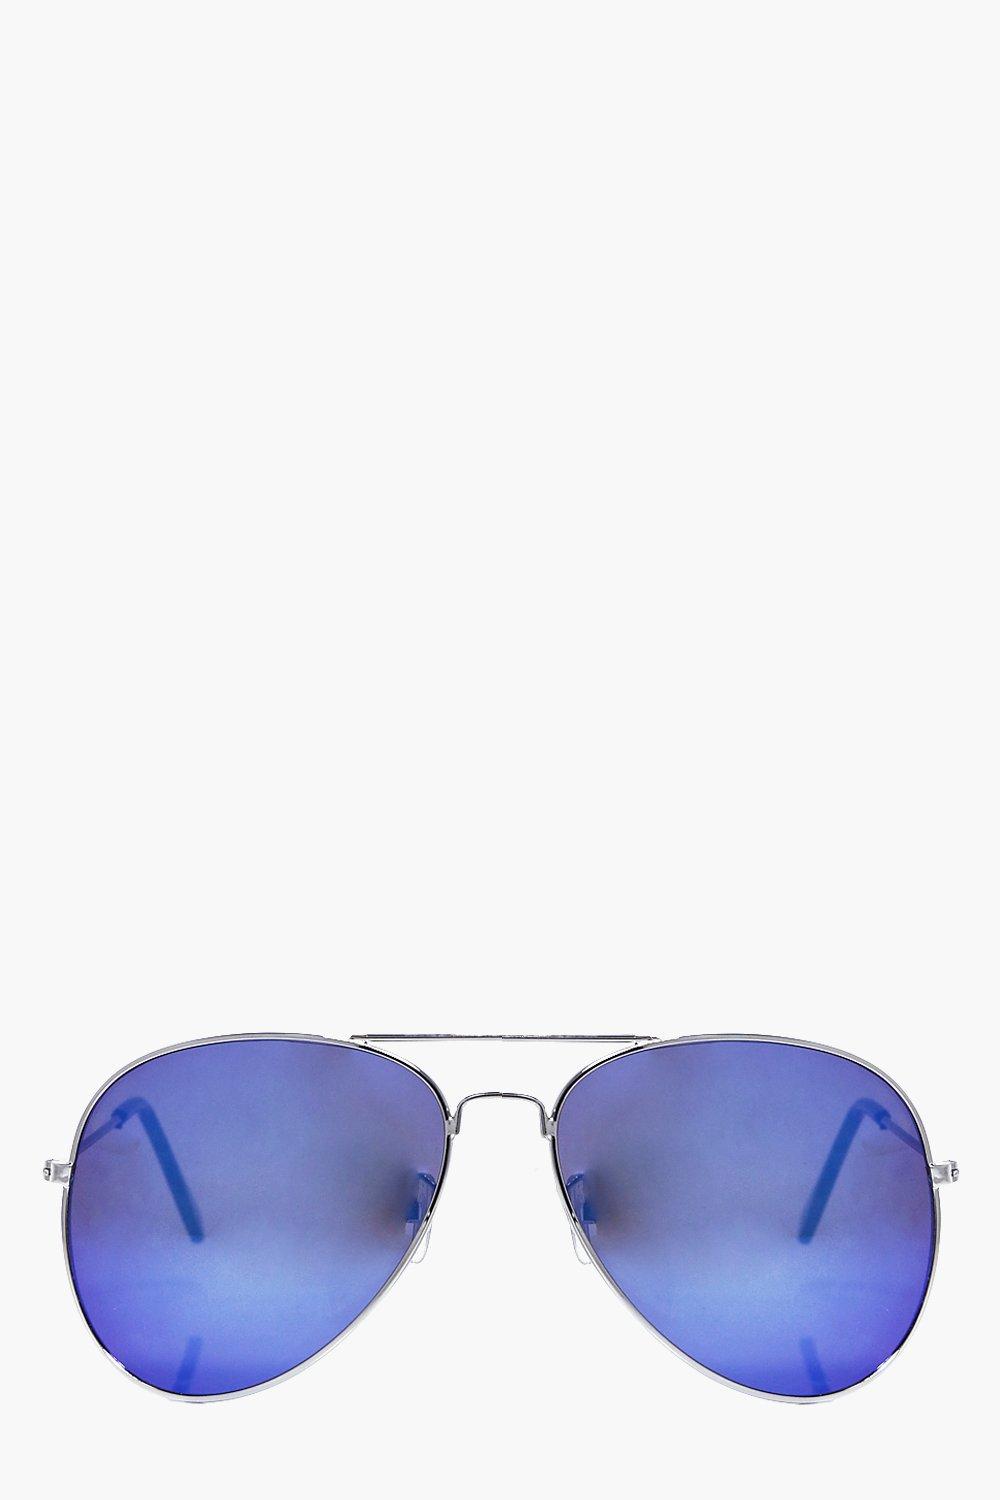 Molly Blue Lense Aviator Sunglasses